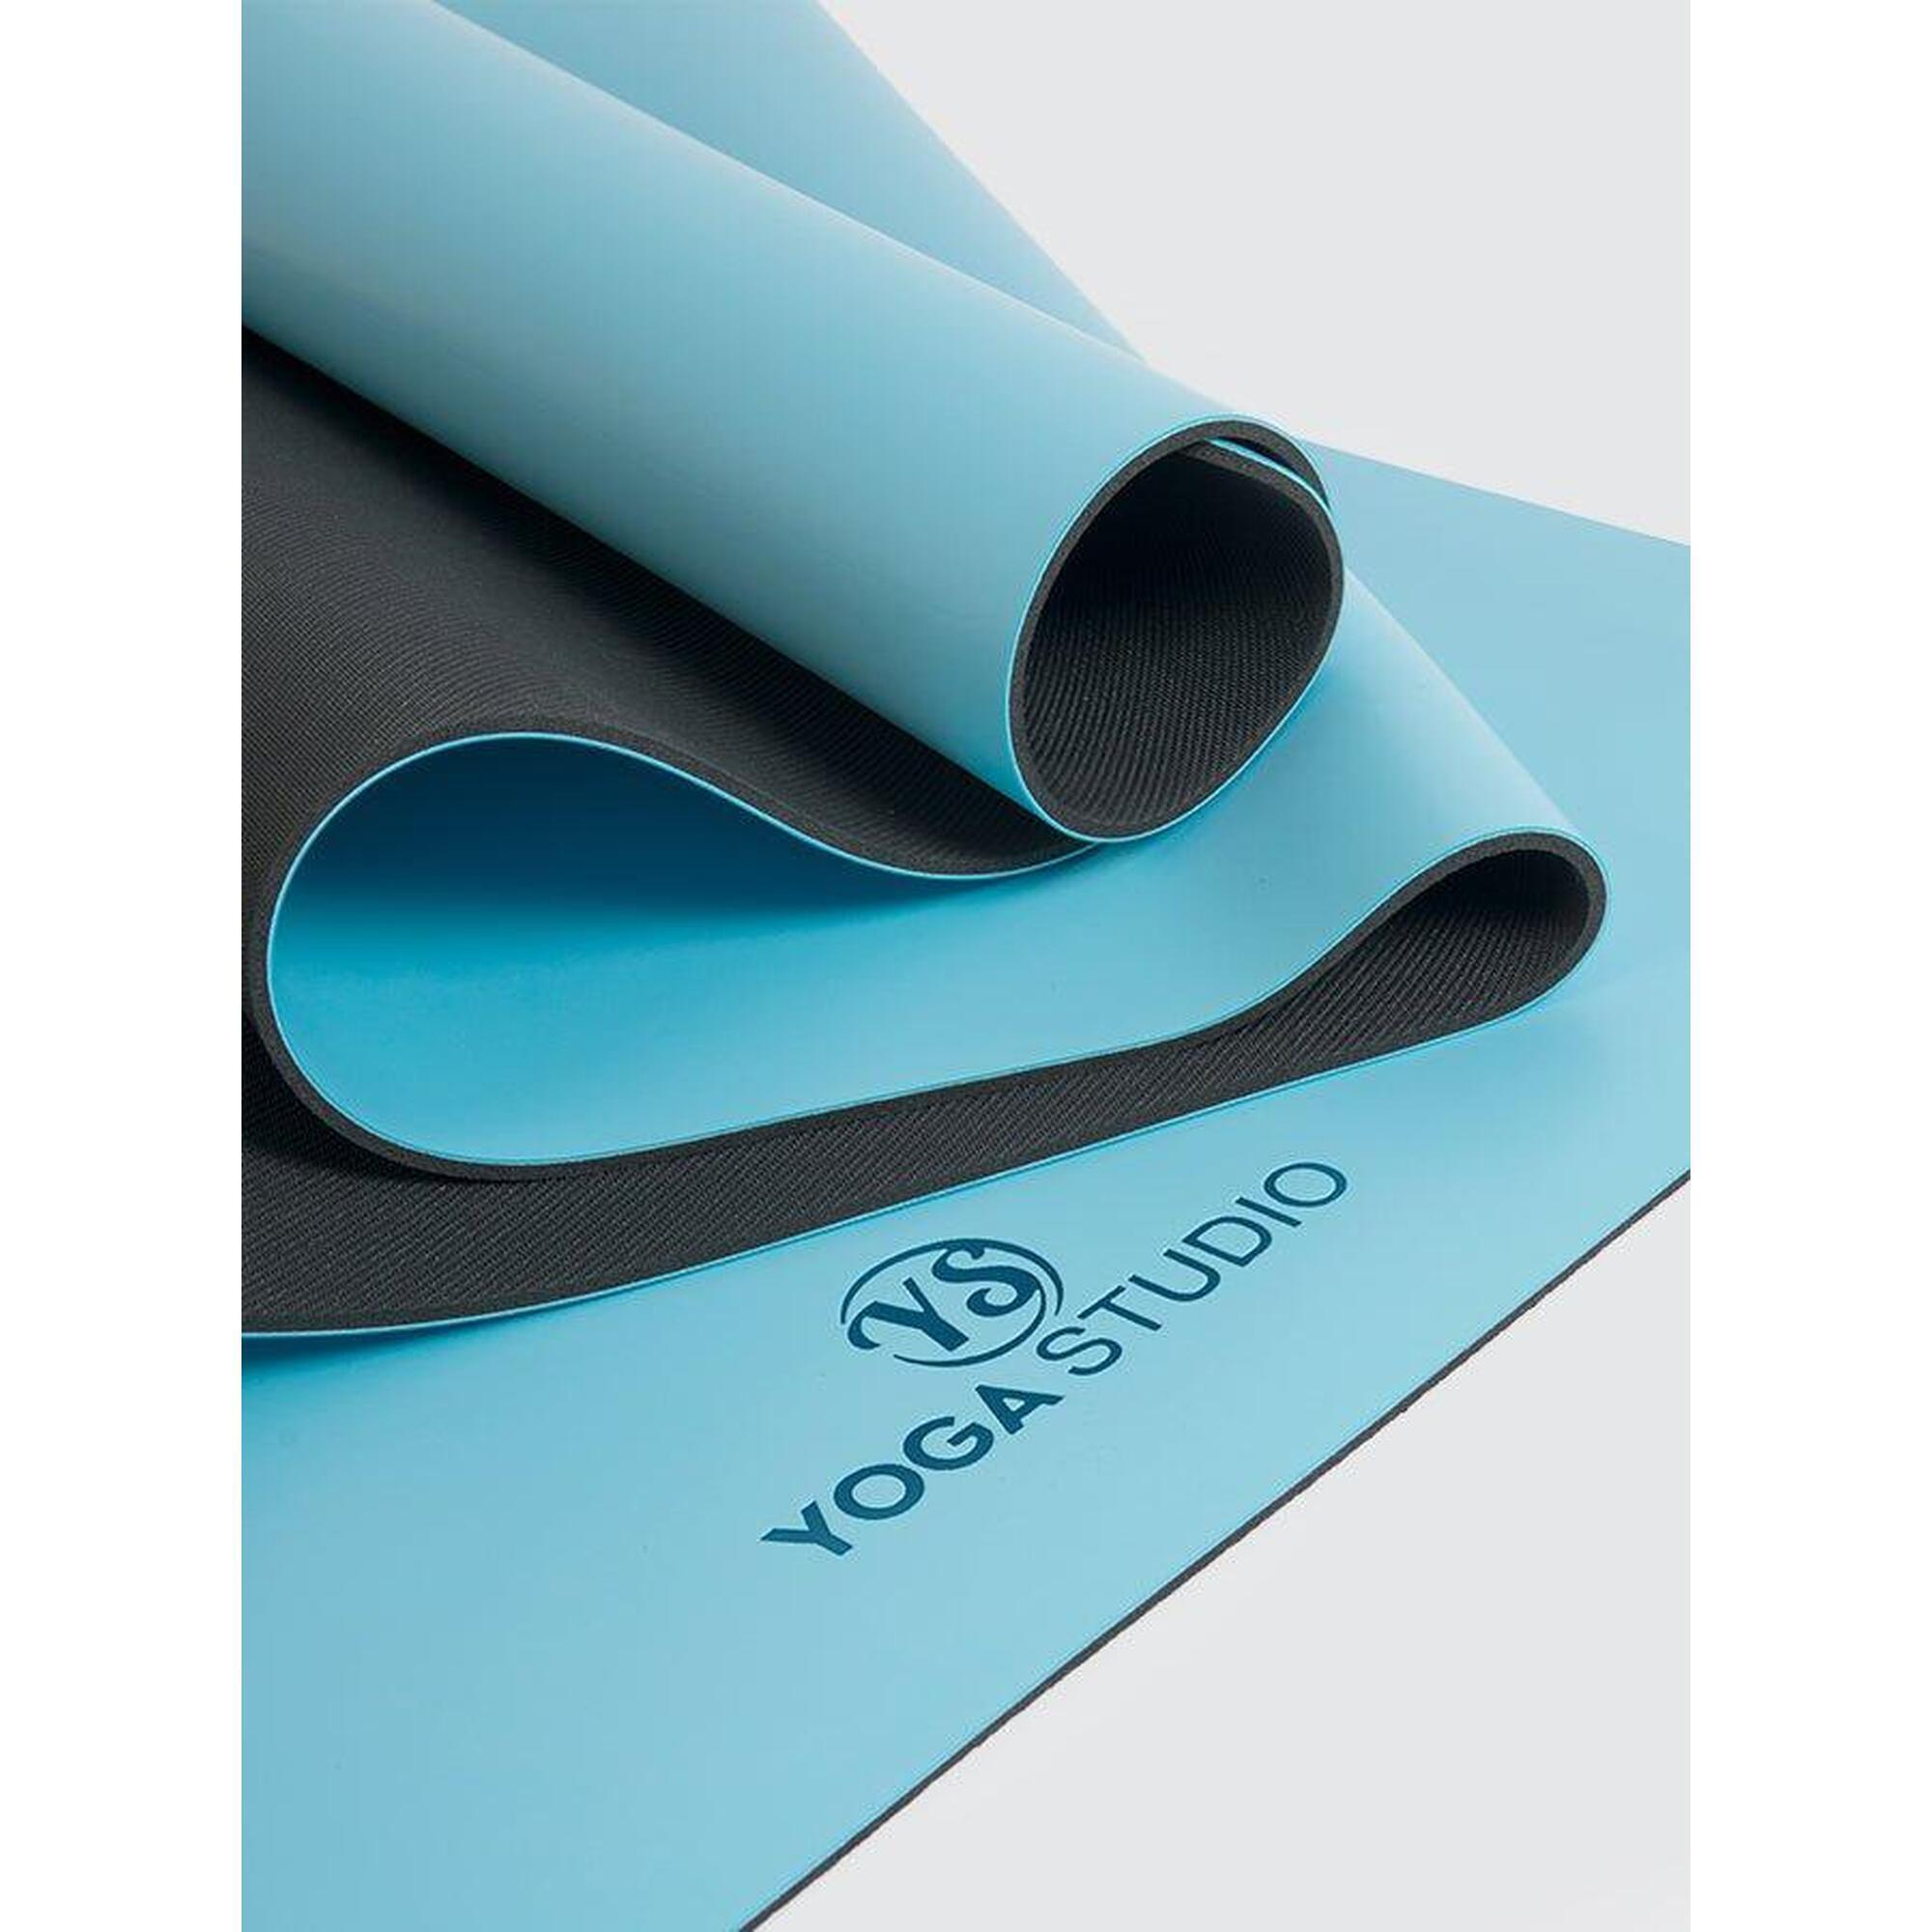 Yoga Studio The Grip Compact Yoga Mat 4mm - Blue 1/4